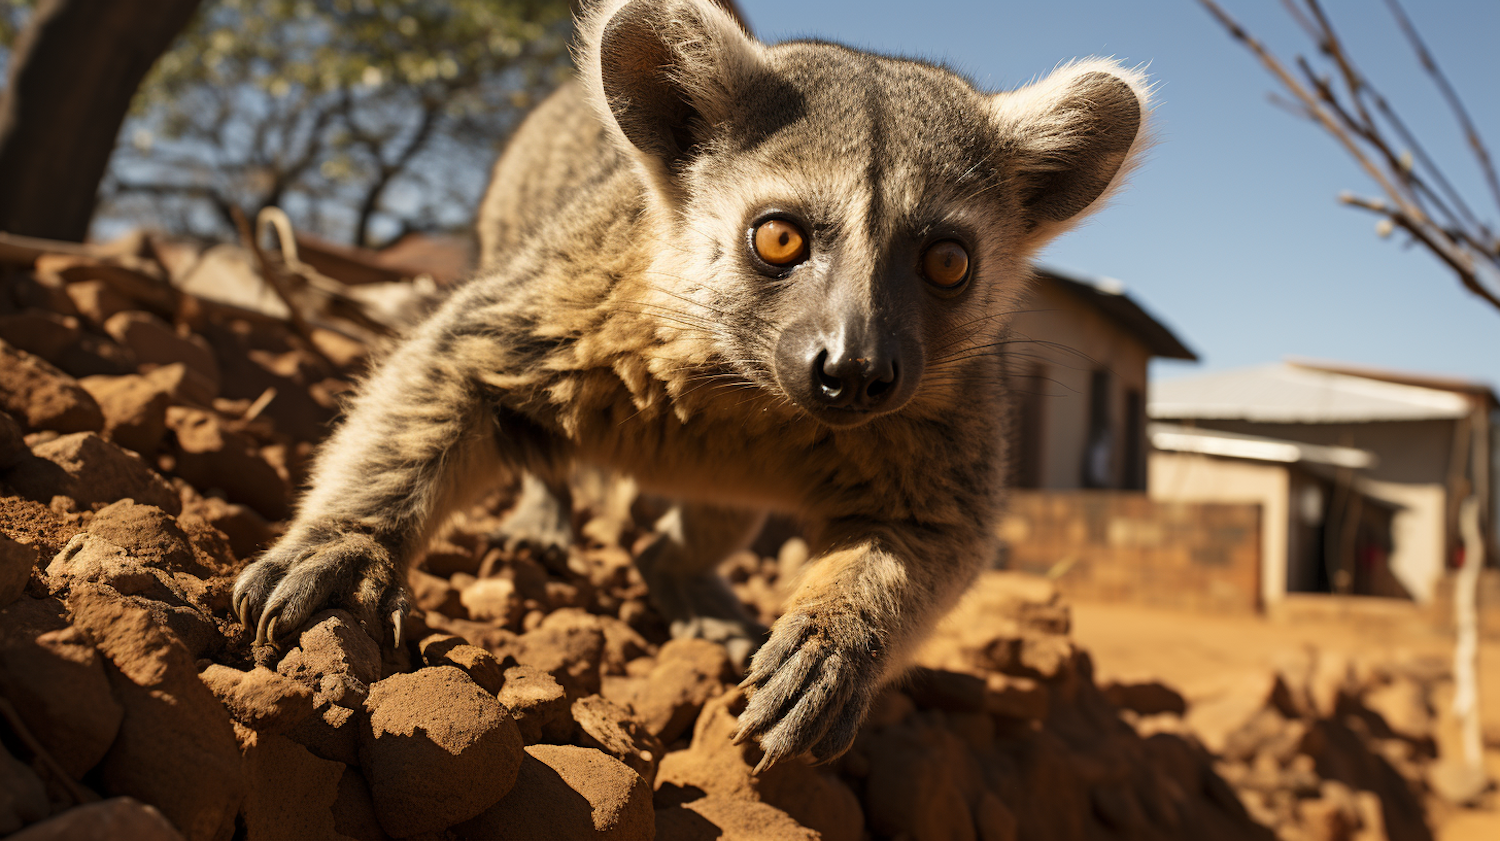 Intrepid Gaze of the Ring-tailed Lemur